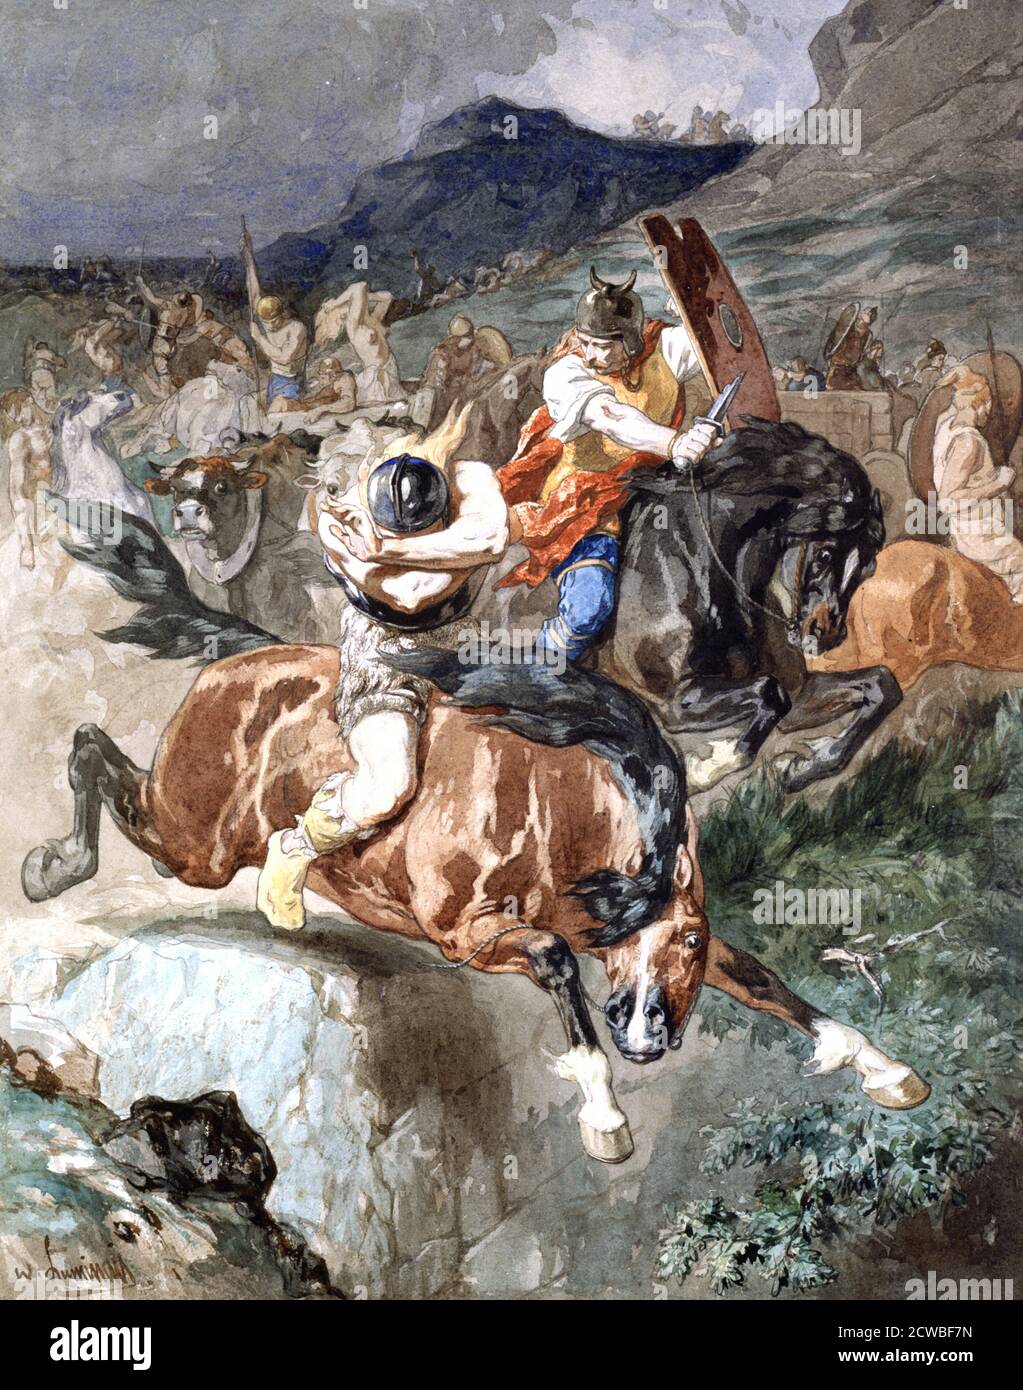 Fight of the Riders', c1842-1896. Artista: Evariste Vital Luminais. Evariste Vital Luminais (1821-1896) è stato un pittore francese. Foto Stock